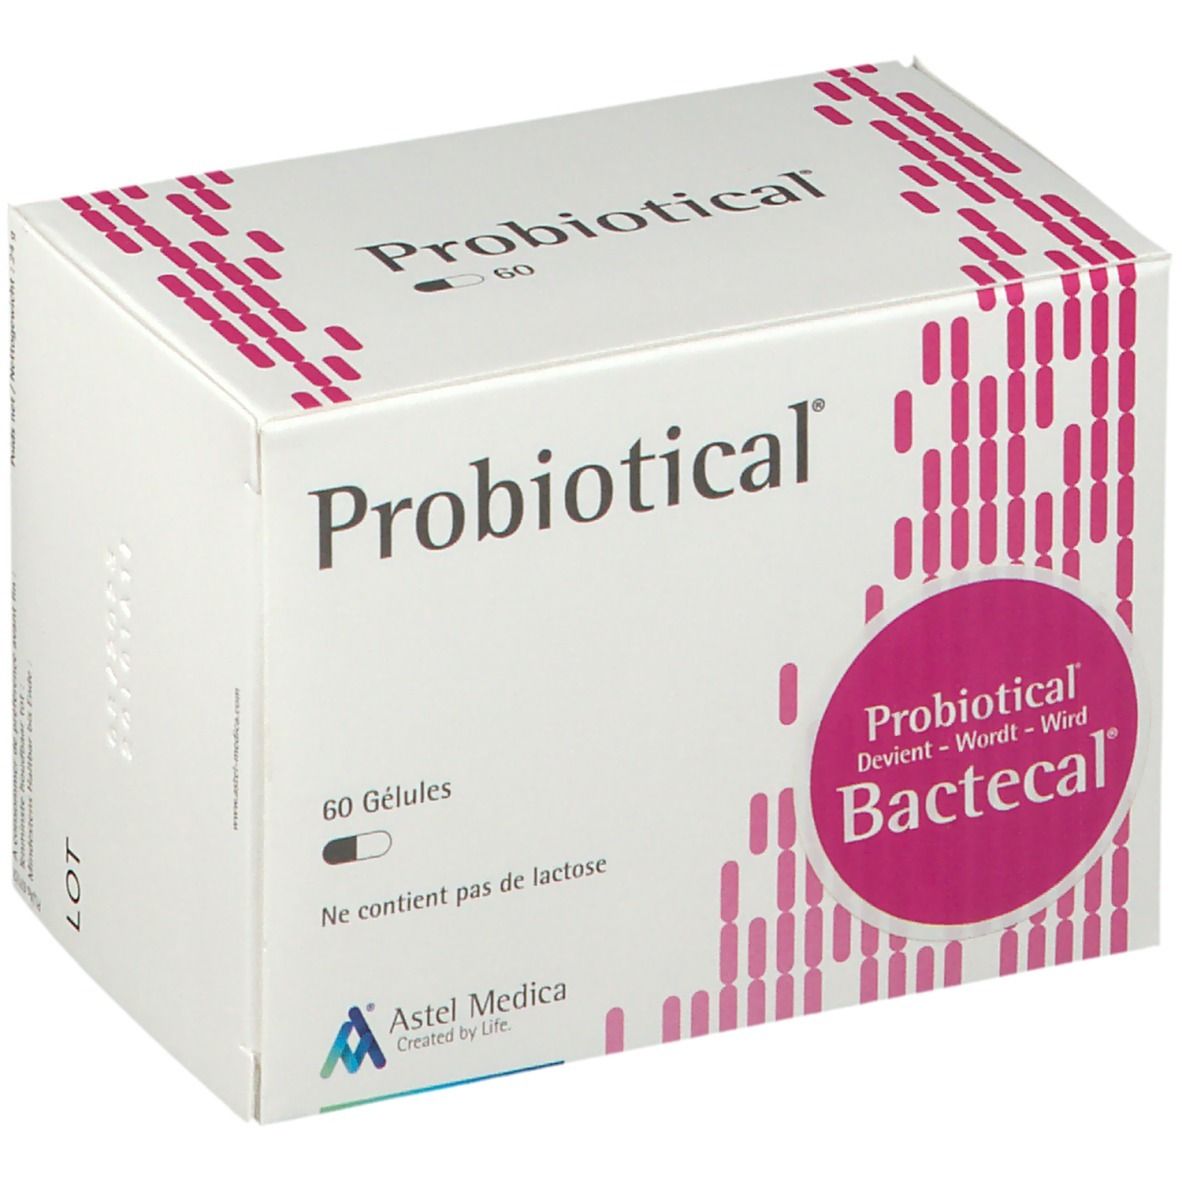 Probiotical 400mg